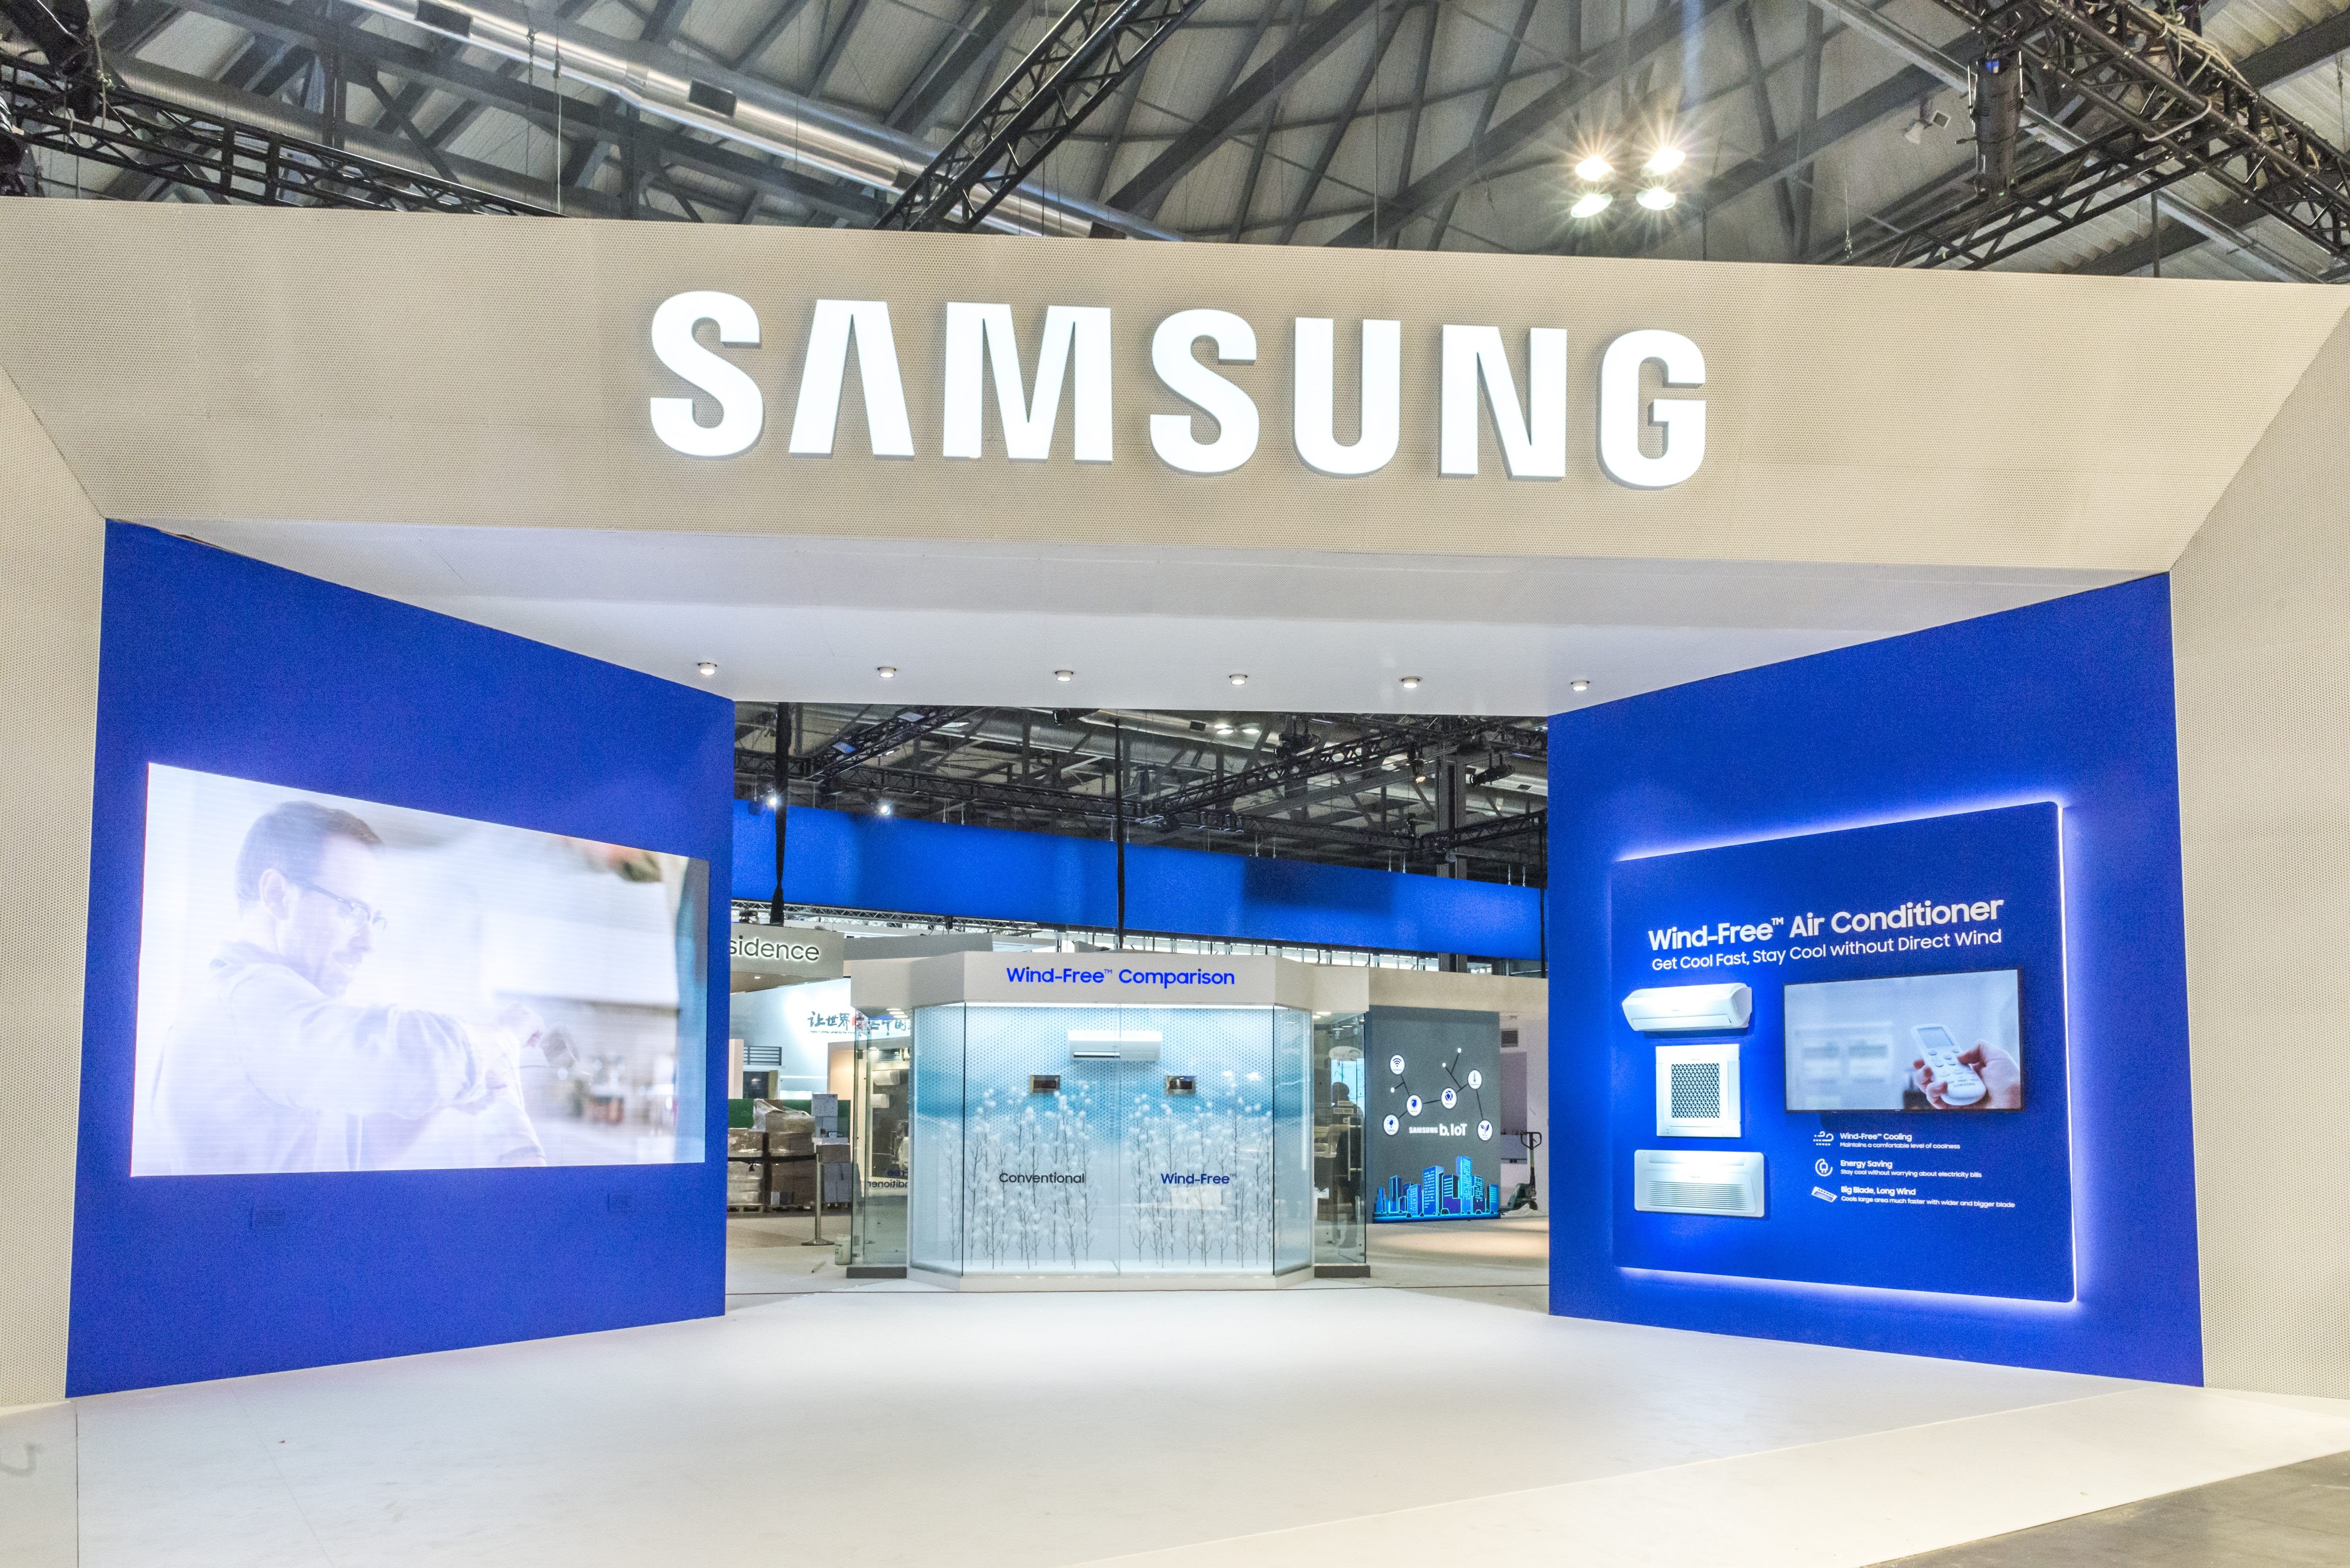 Samsung lançon kondicionerët Wind-FreeTM 